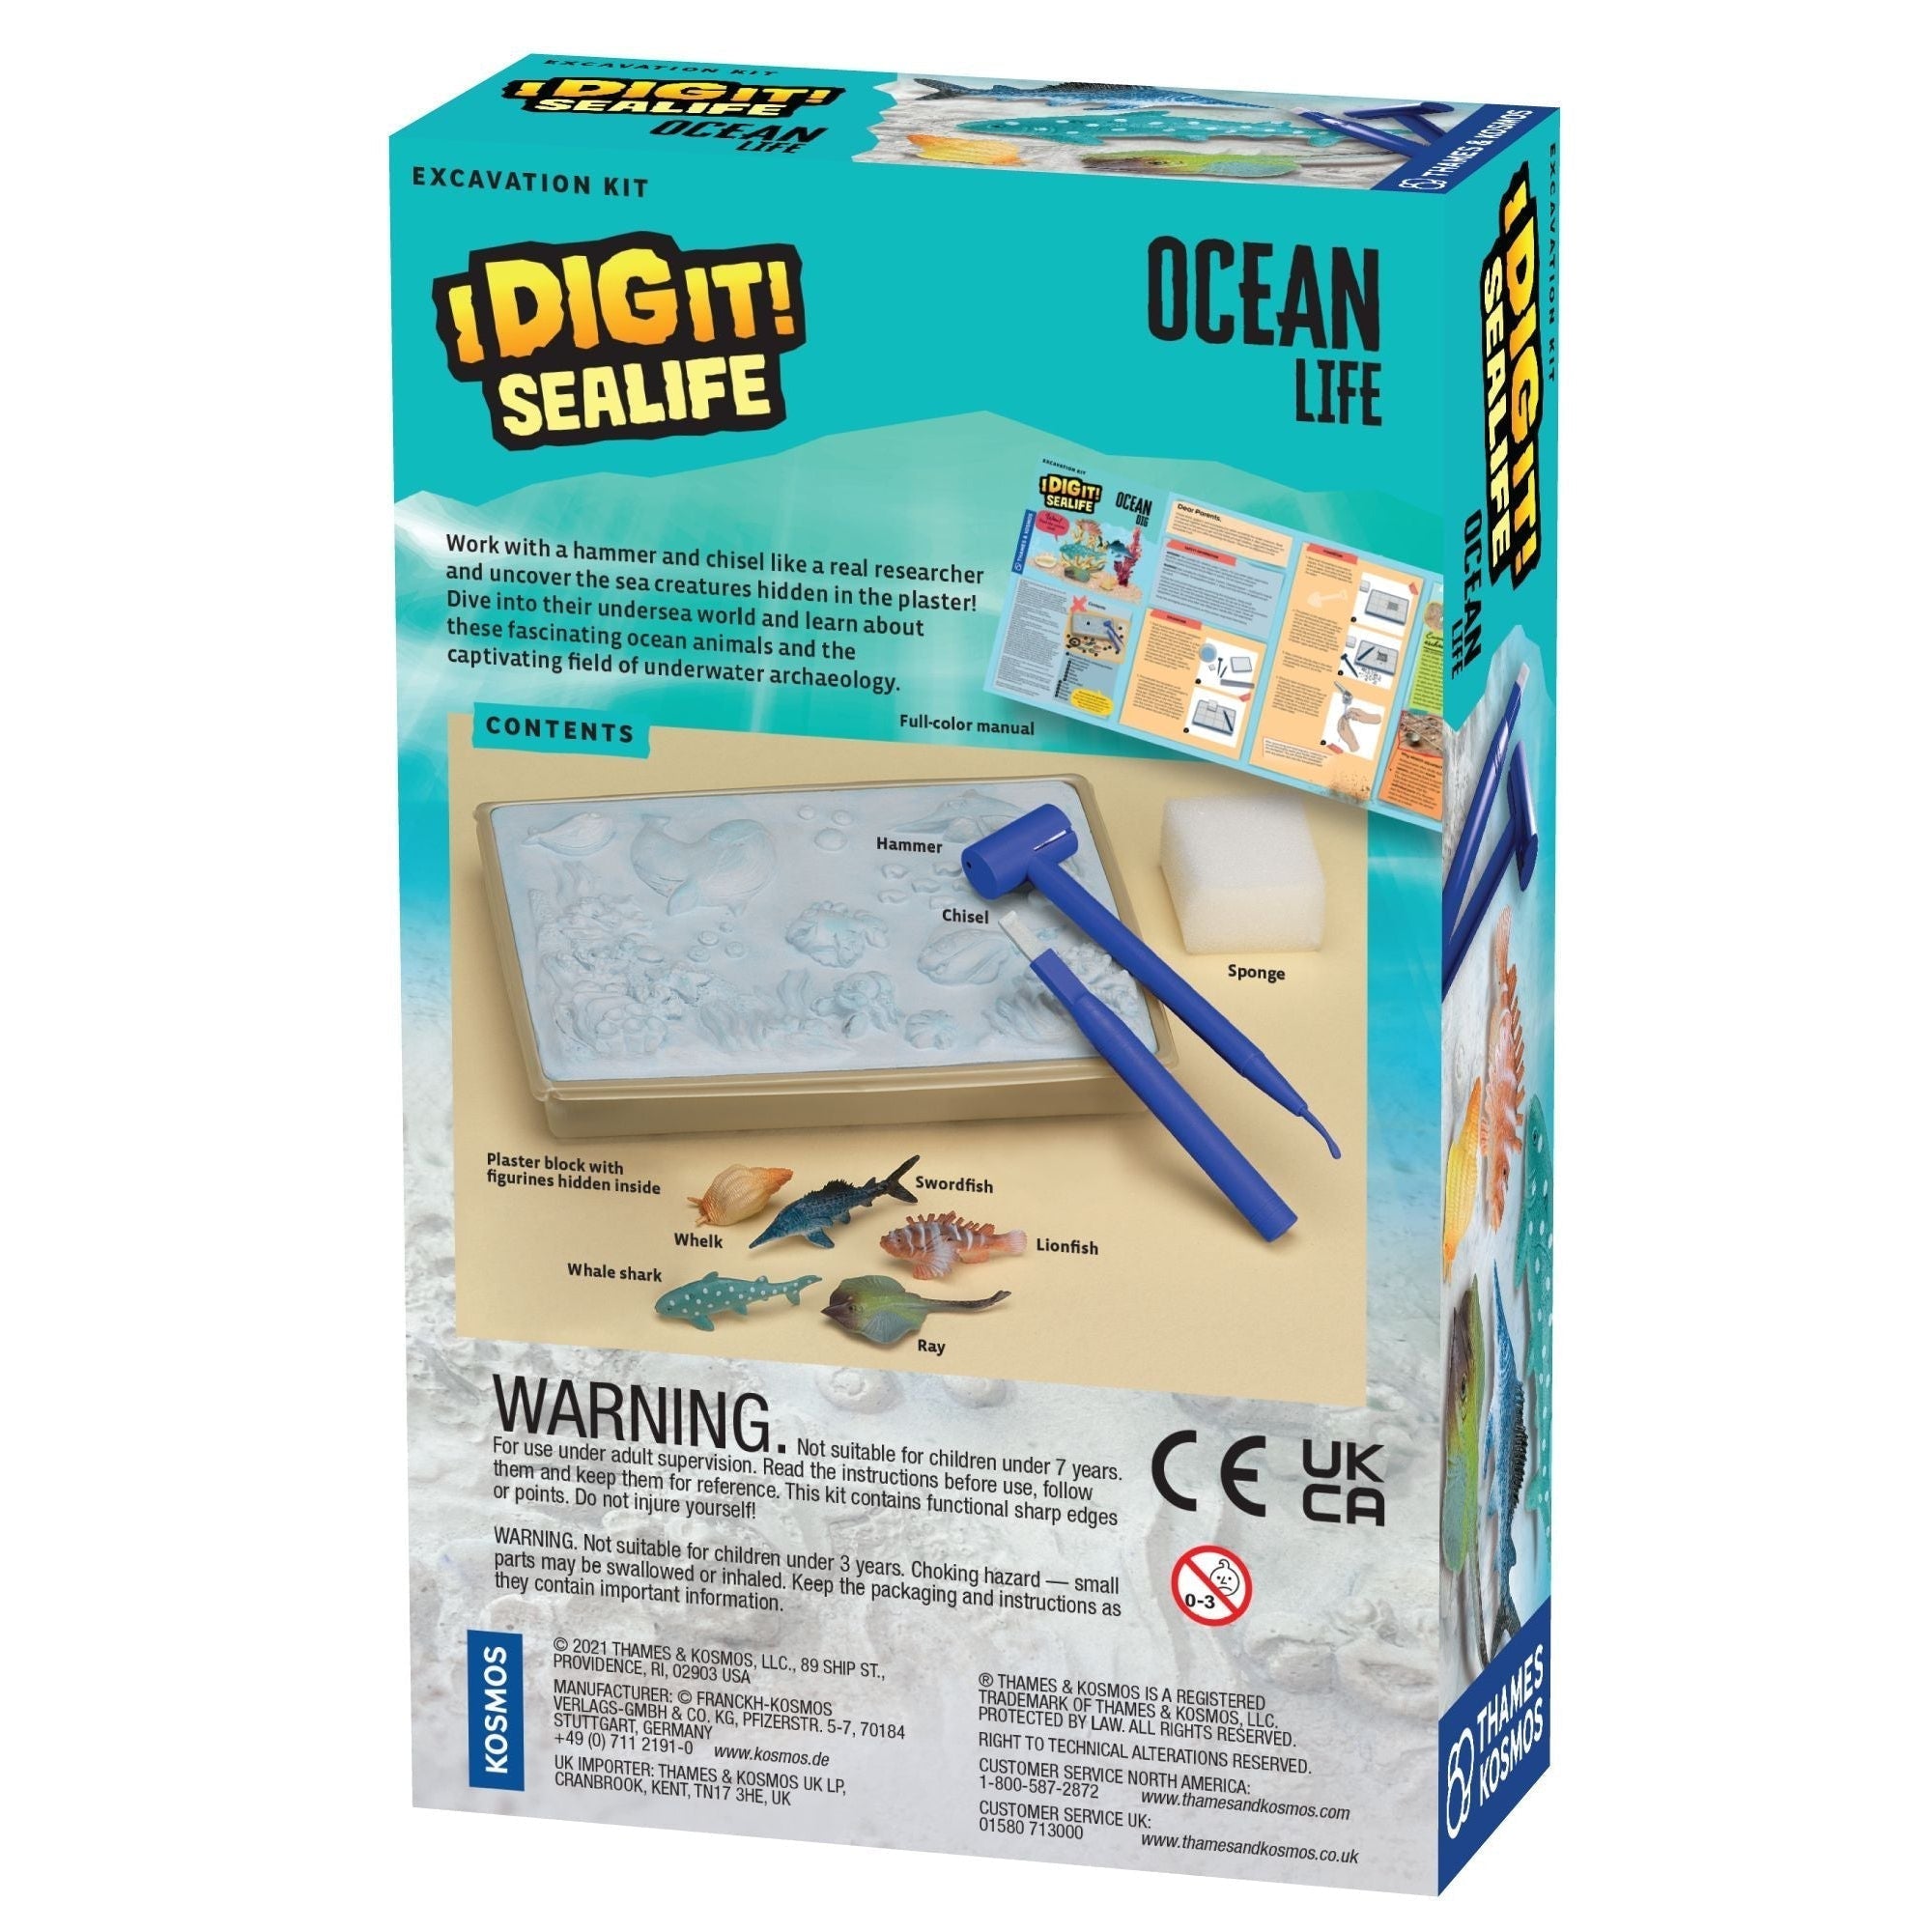 Thames & Kosmos-Thames & Kosmos I Dig It! Sealife - Ocean Life-657537-Legacy Toys